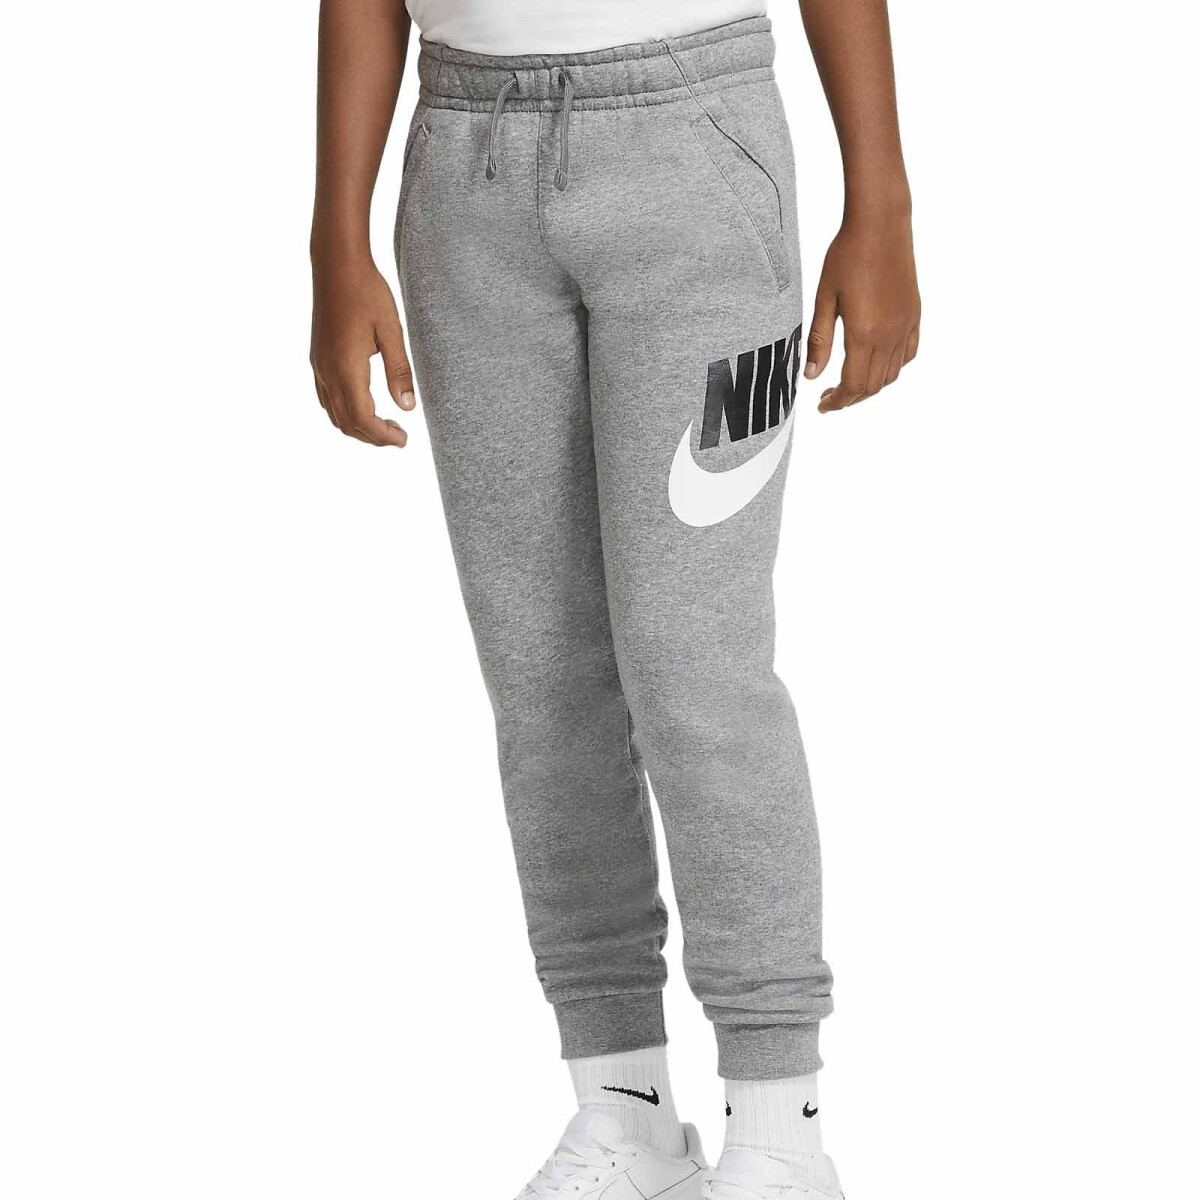 Pantalon Nike Moda Niño Club + Hbr Carbon Heather/Smoke Grey - Color Único 